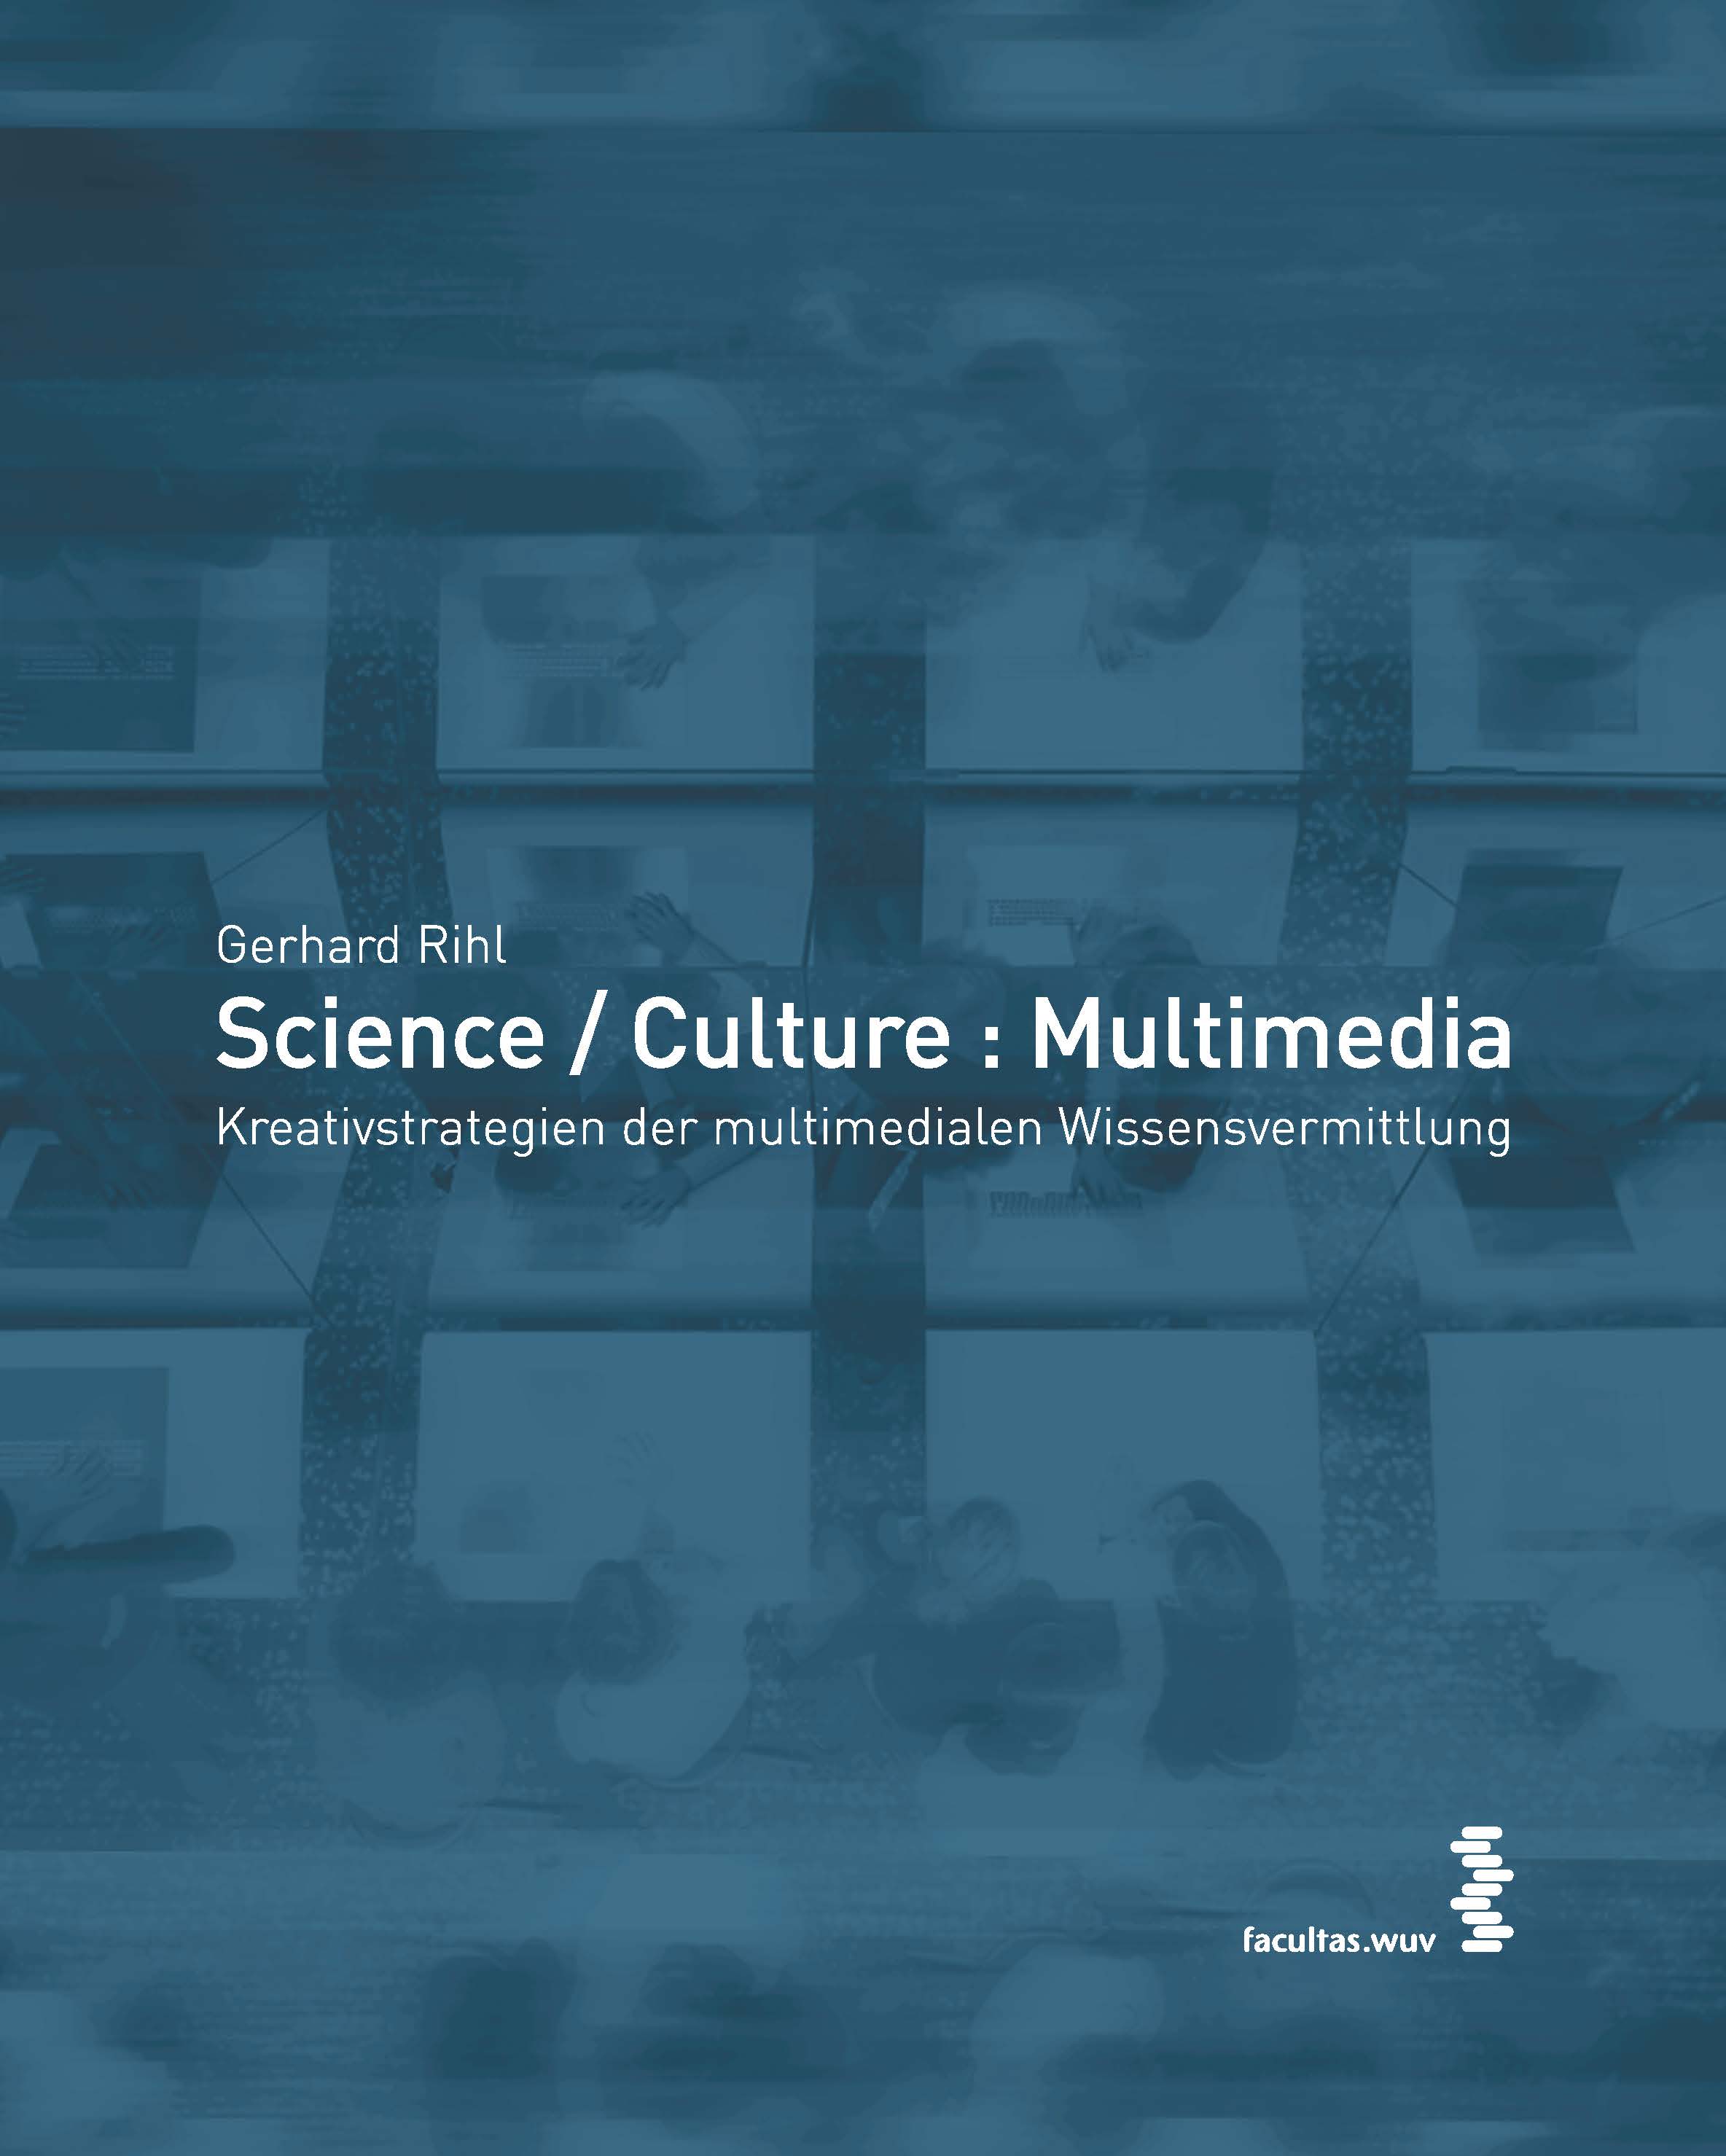 Buch "Science / Culture : Multimedia" – Cover